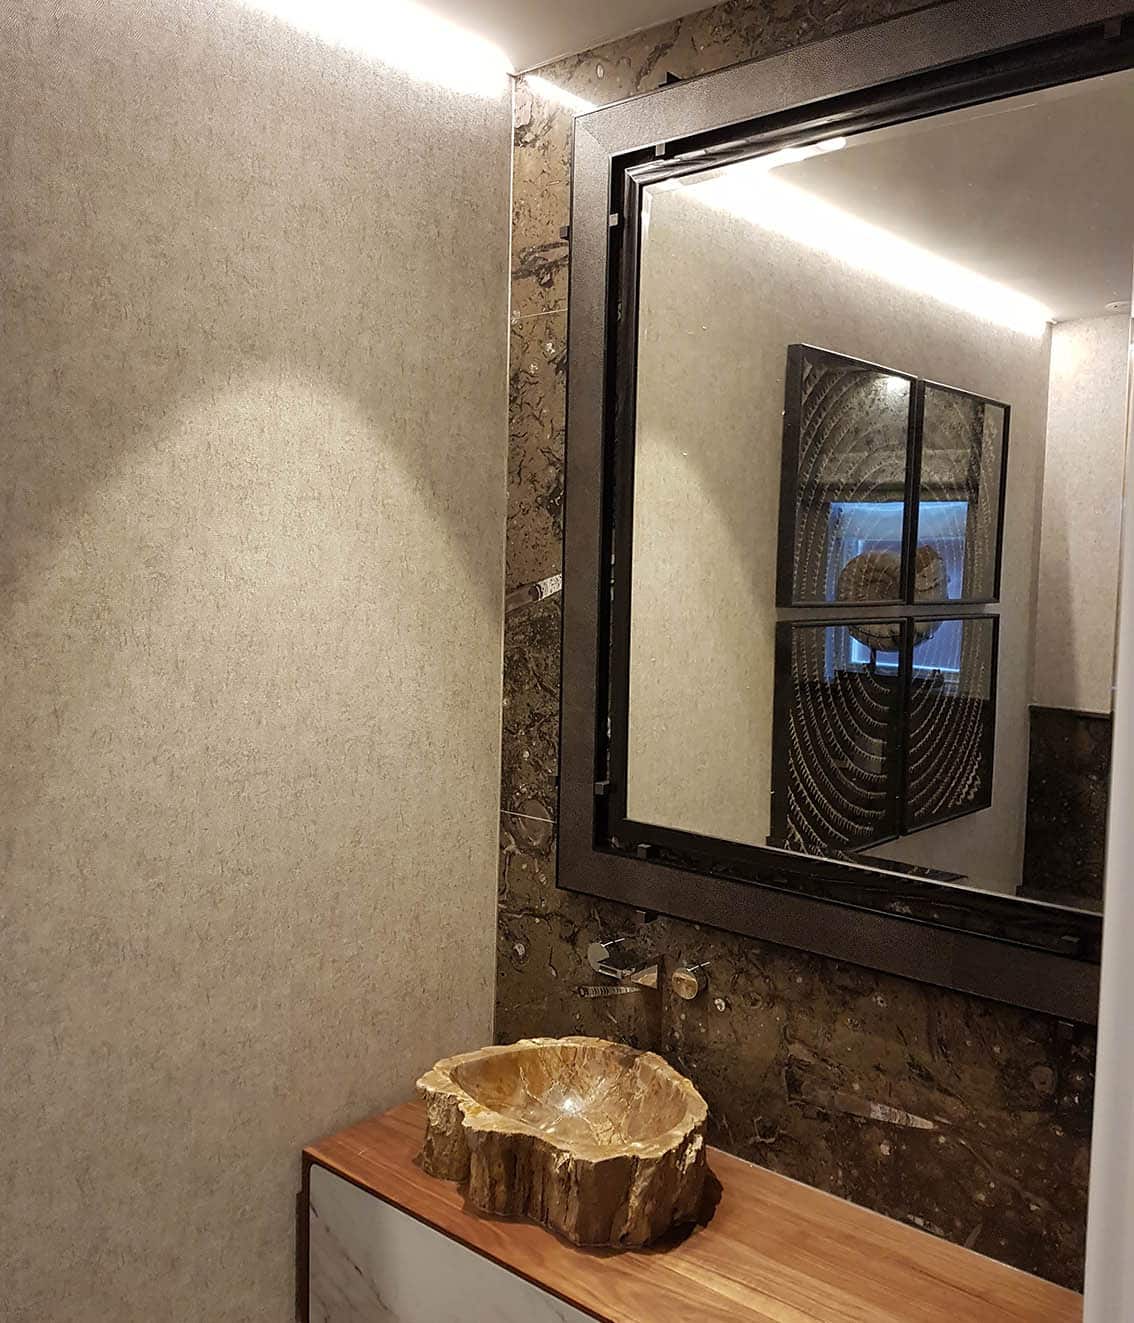 Tektura wallpaper installation in a stylish bathroom.